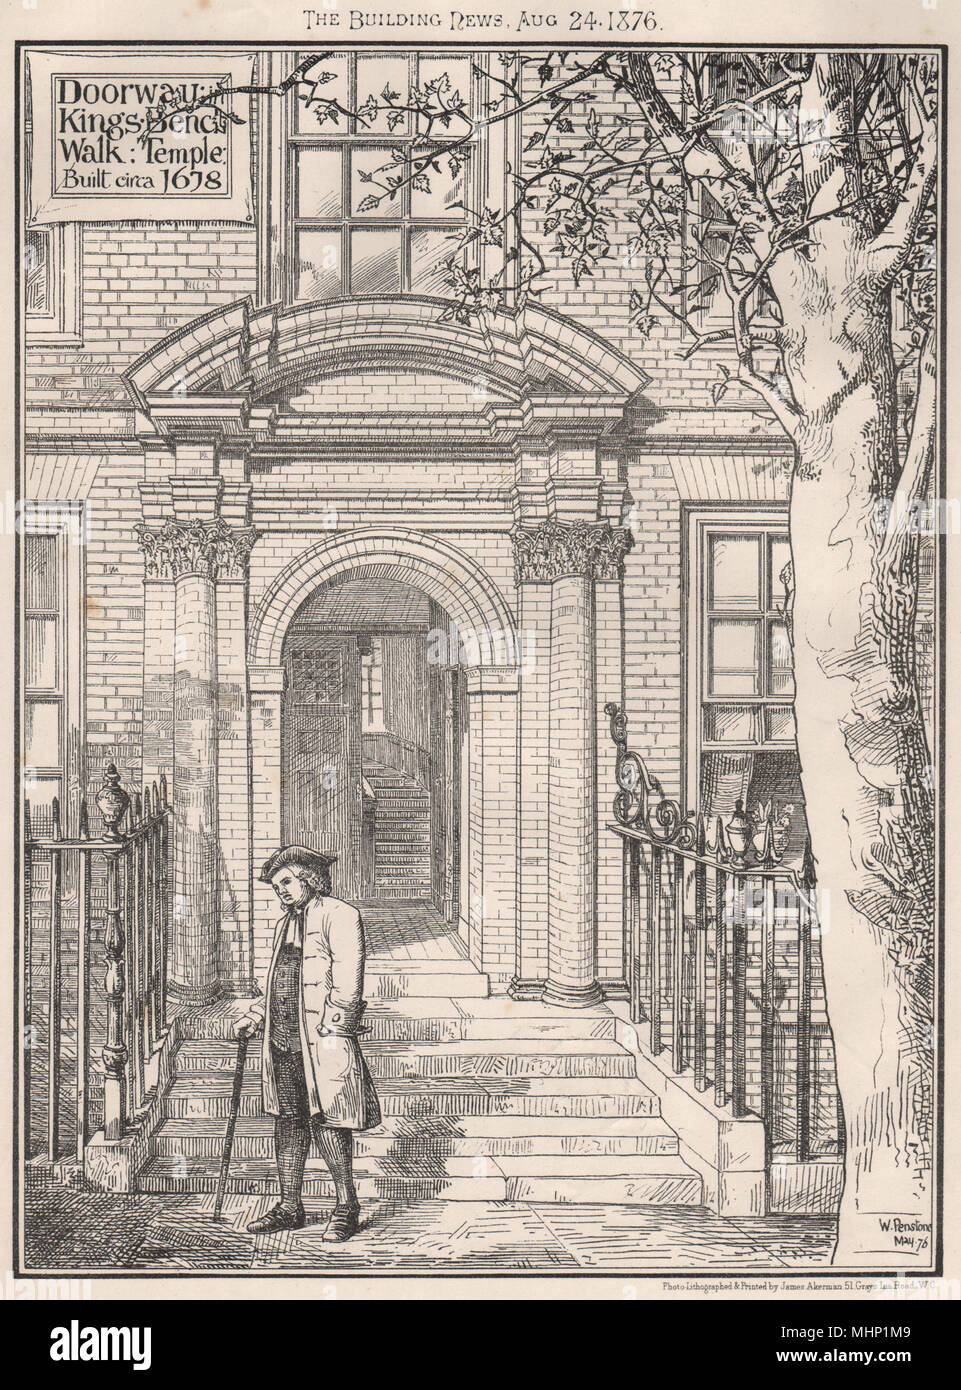 Doorway Kings Bench Walk, Temple, built circa 1678. London 1876 old print Stock Photo